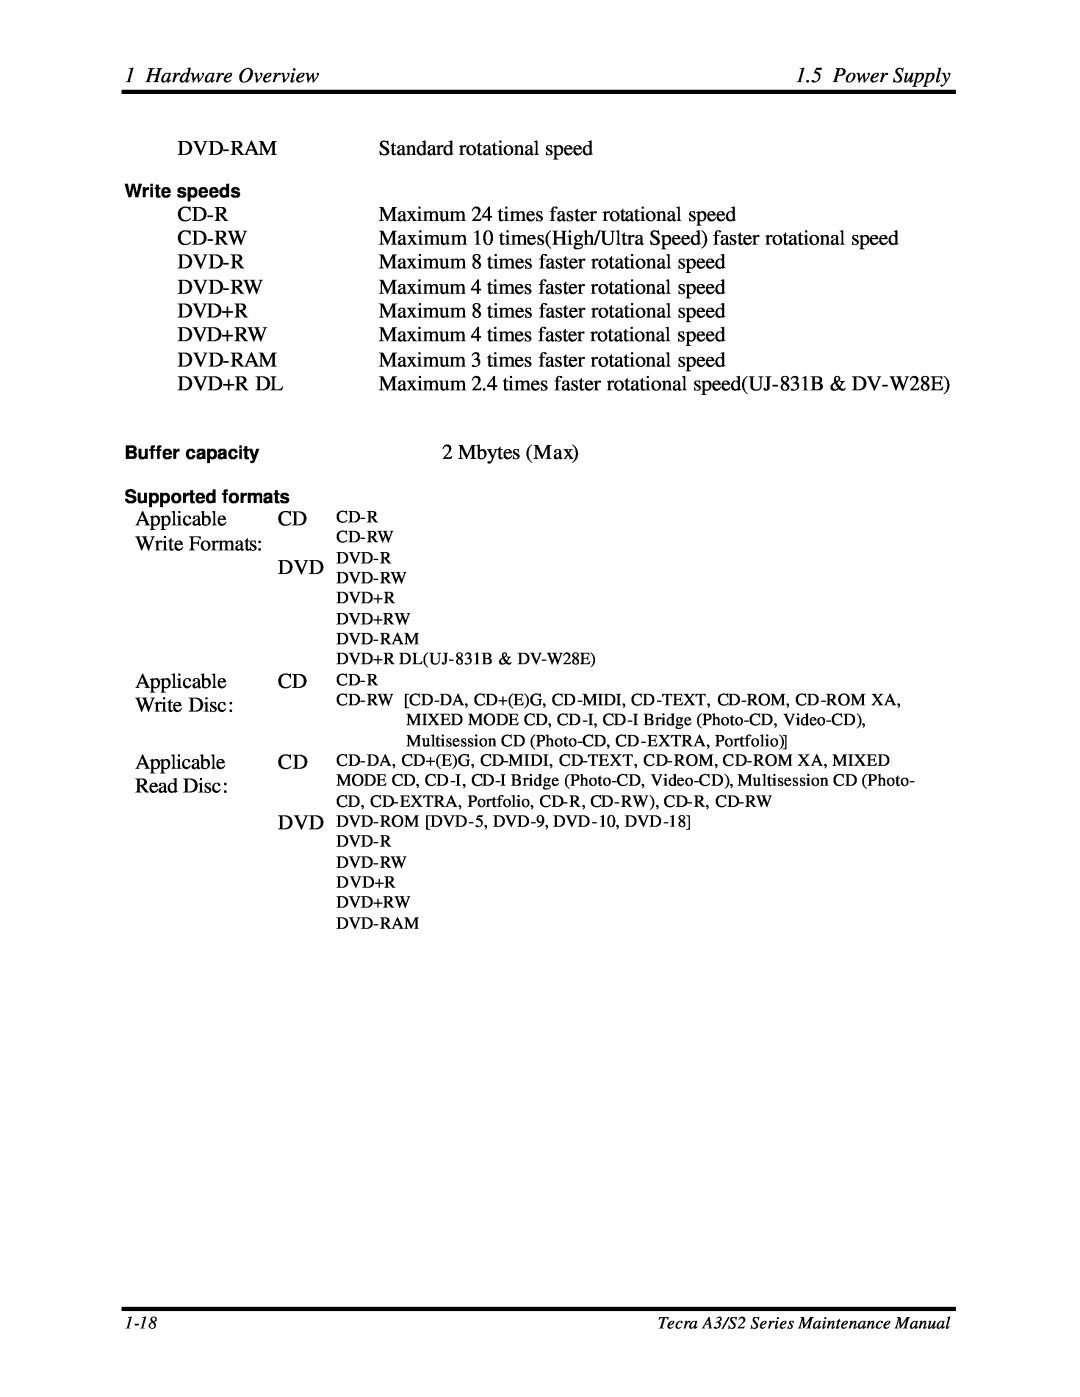 Toshiba S2 manual Dvd-Ram, Standard rotational speed, Hardware Overview, Power Supply 